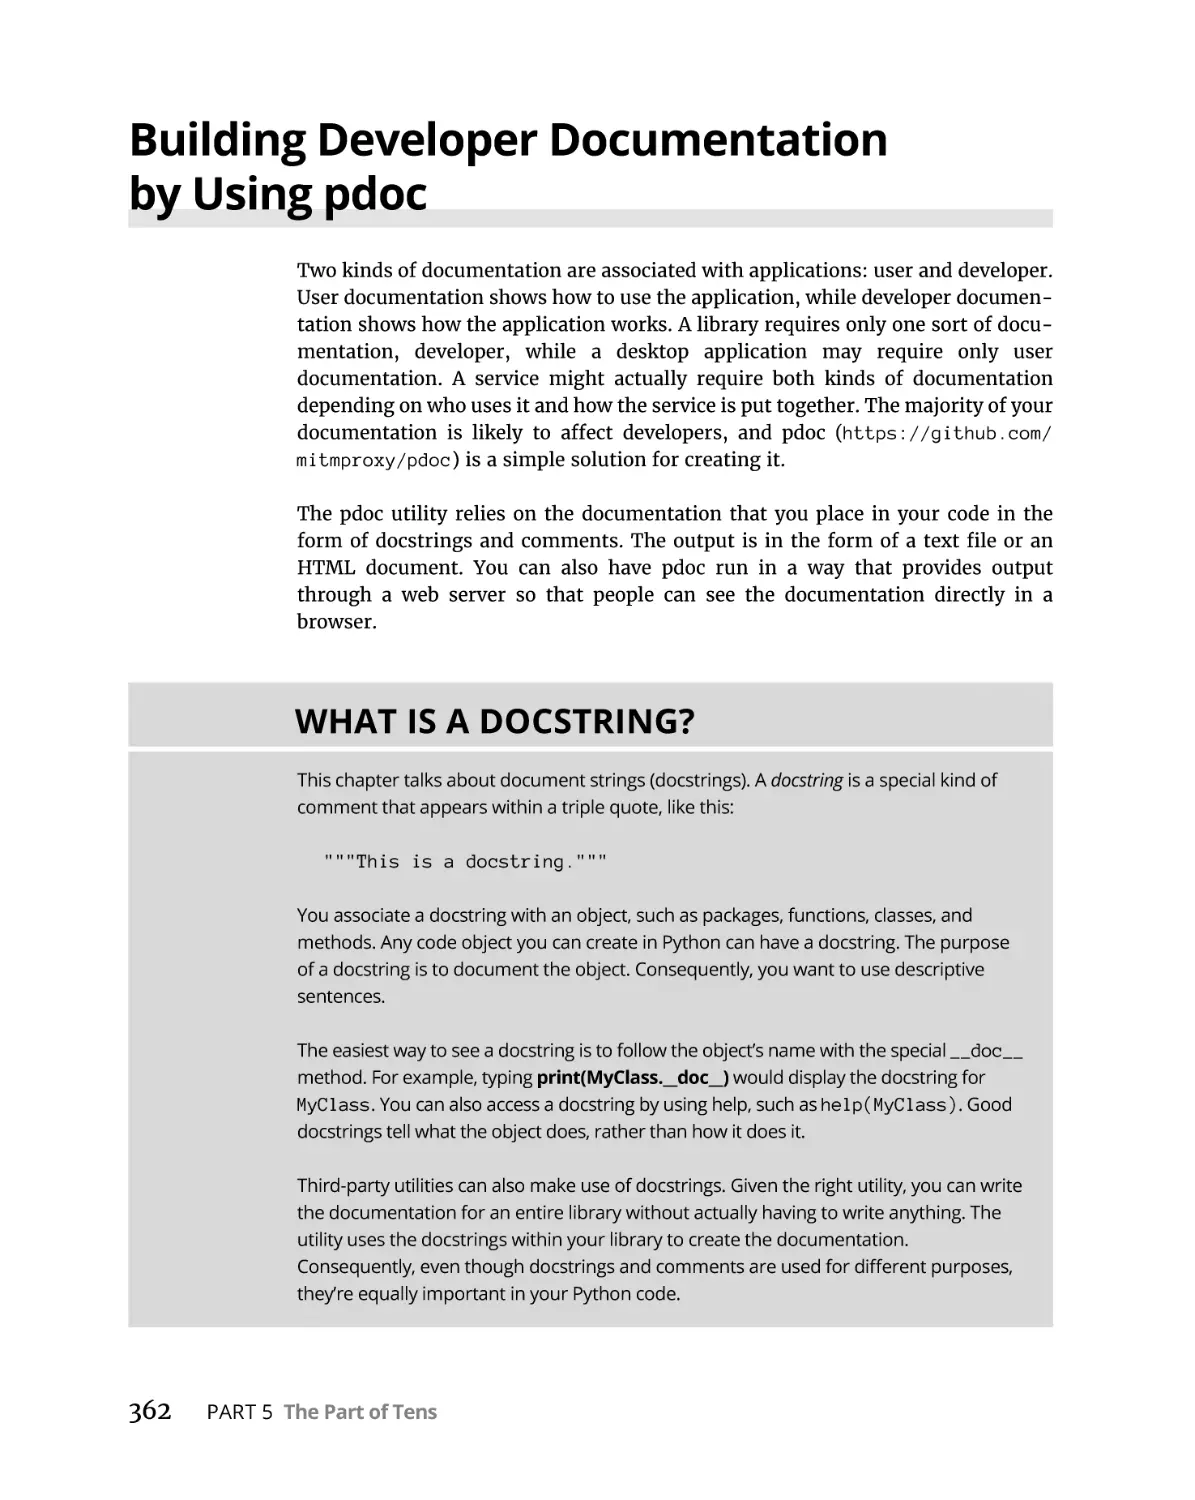 Building Developer Documentation by Using pdoc